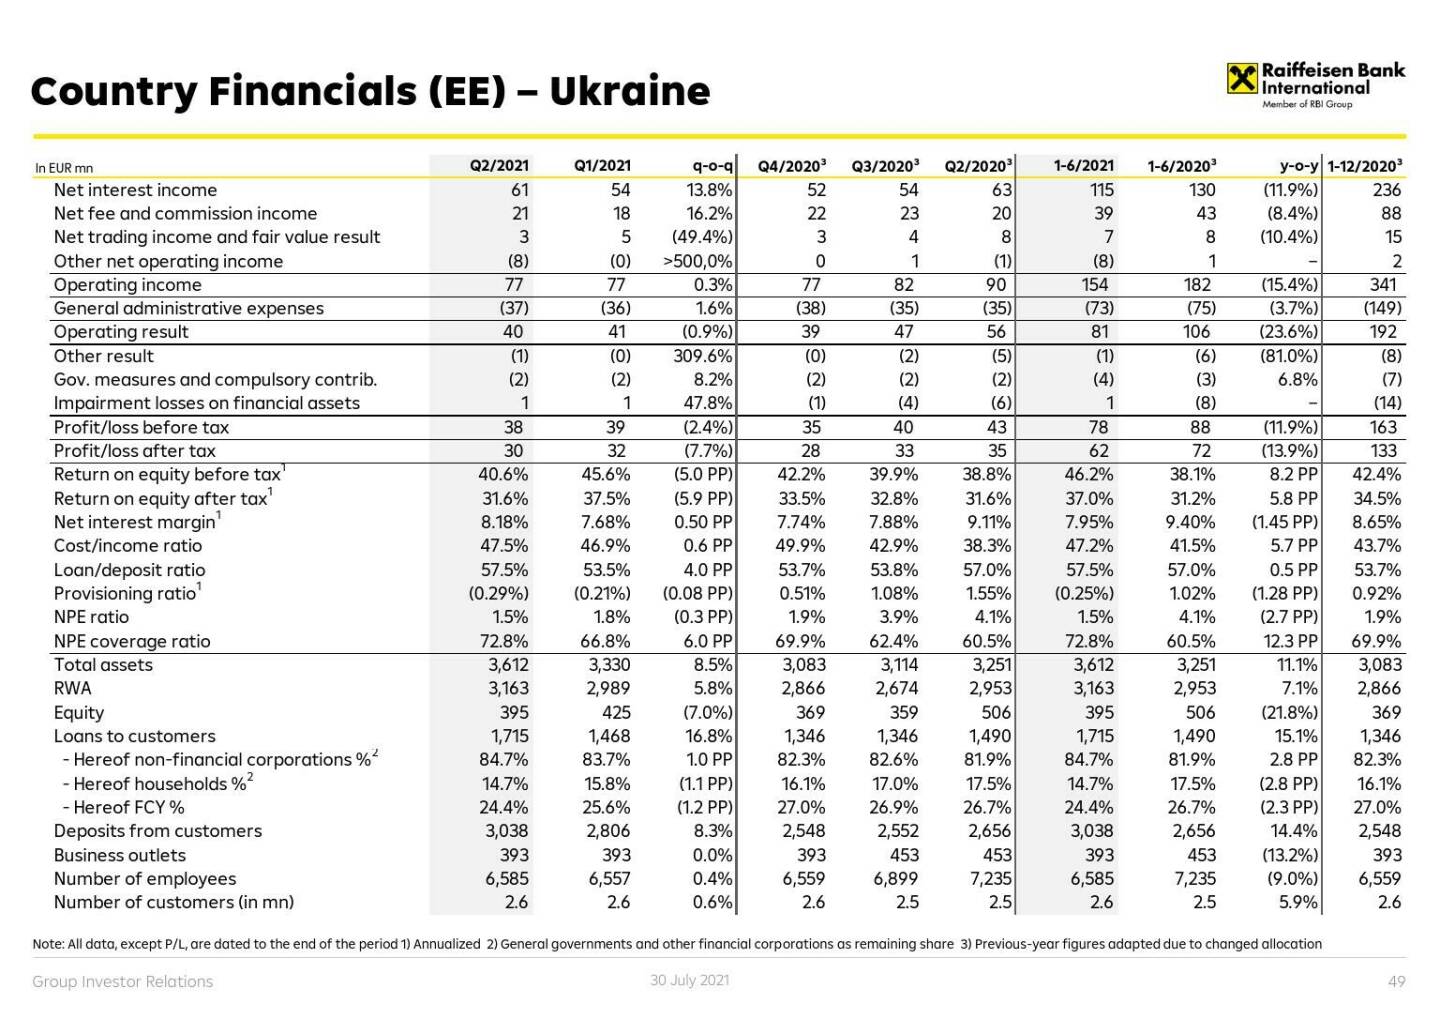 RBI - Country financials (CE) - Ukraine